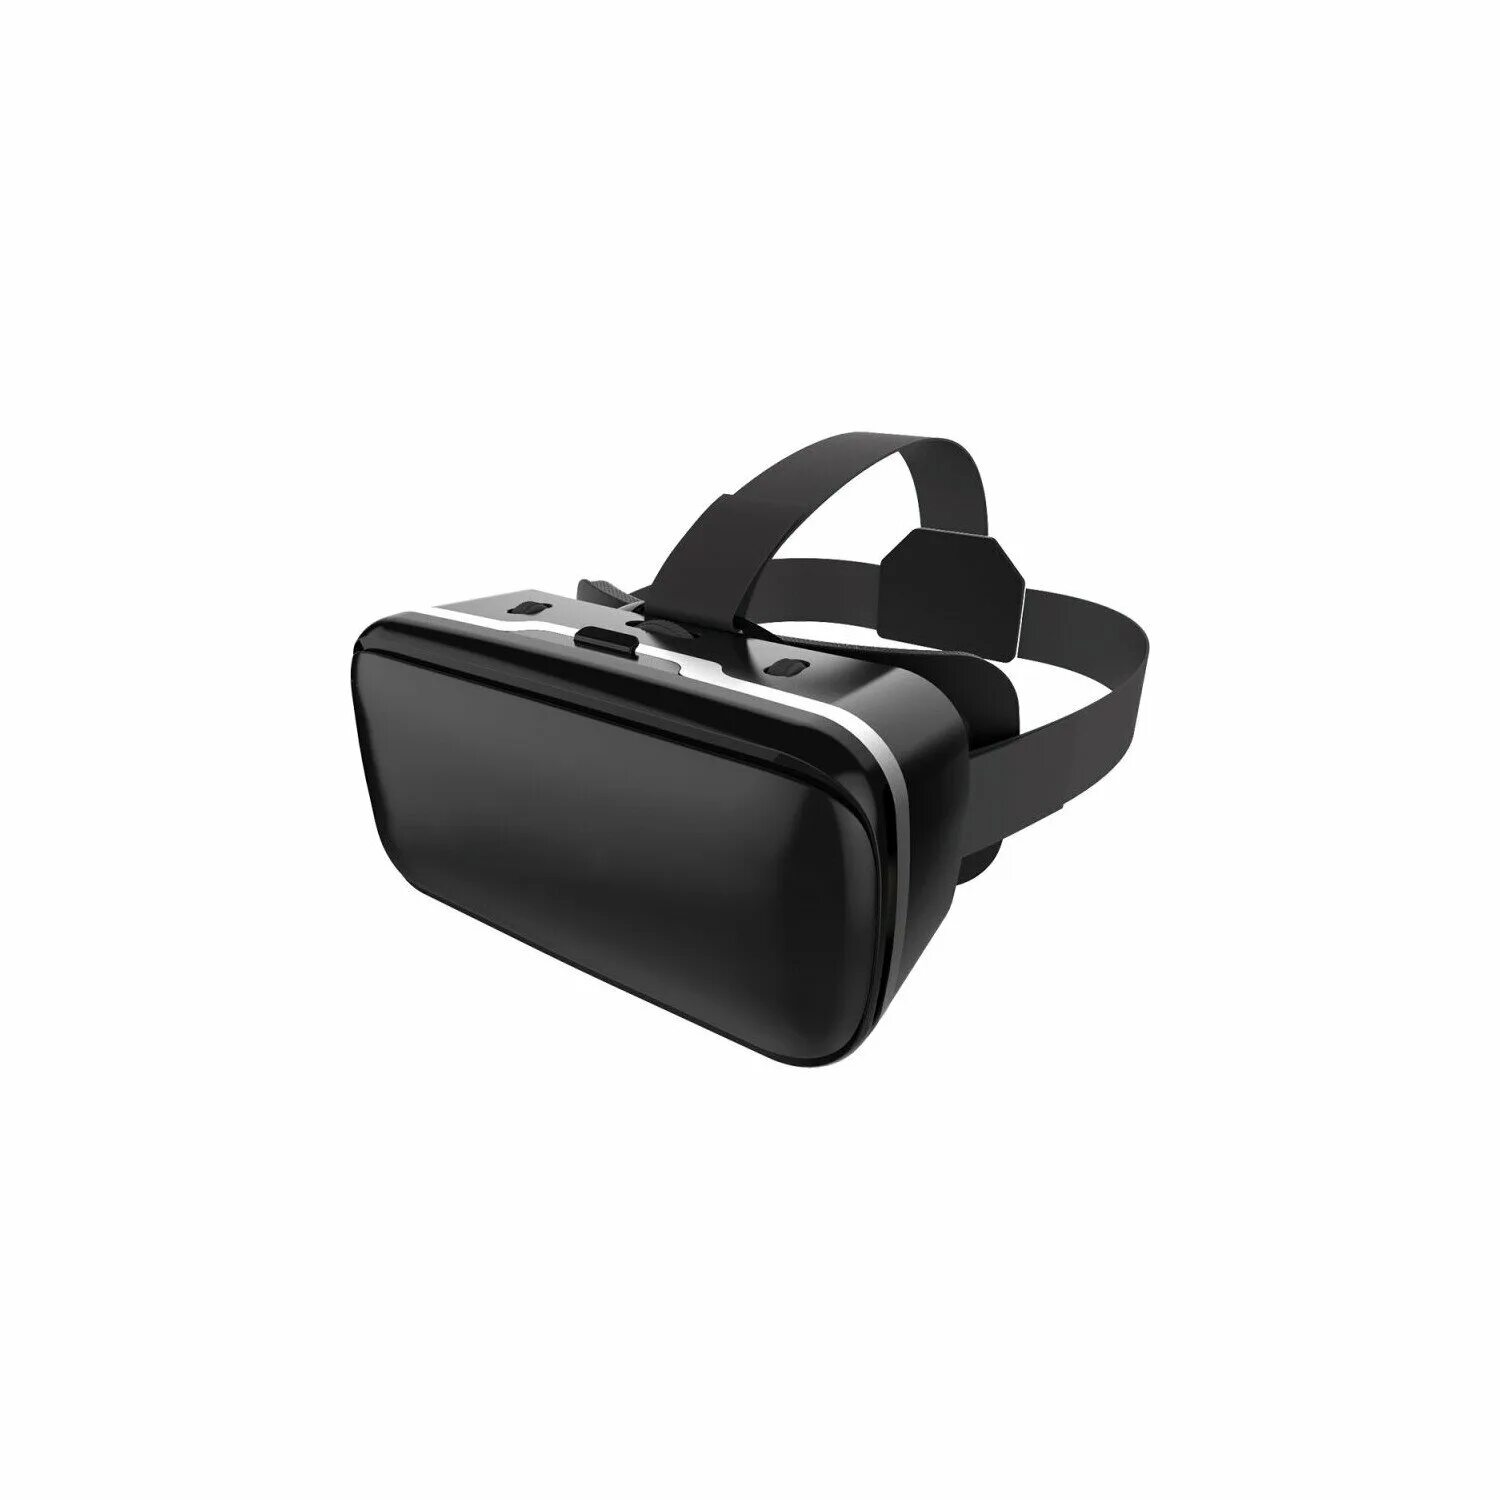 Про vr очки. Smarterra vr2 Mark 2. Smarterra vr2. 3d-очки виртуальной реальности Smarterra VR. Очки виртуальной реальности для смартфона Smarterra vr2 Mark 2.